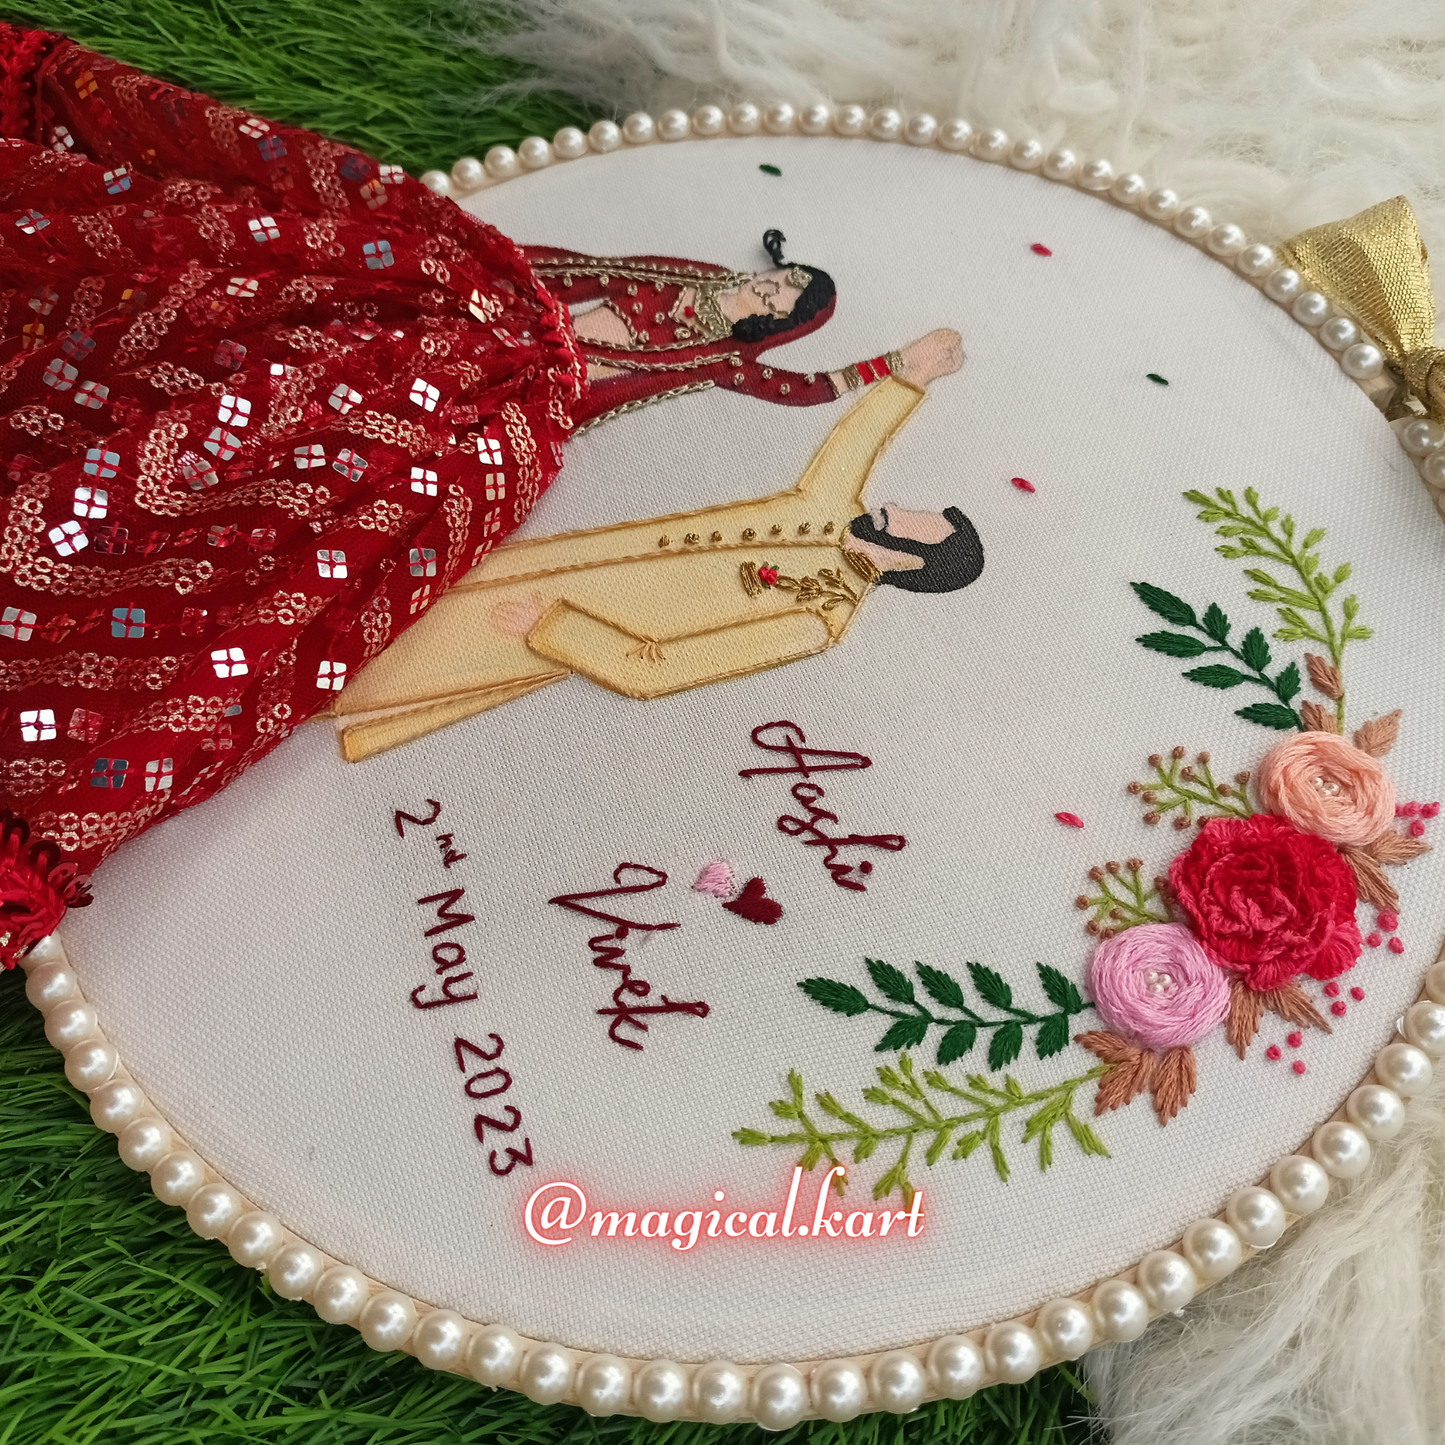 Handcrafted Embroidered Hoop Art: The Perfect Wedding Keepsake